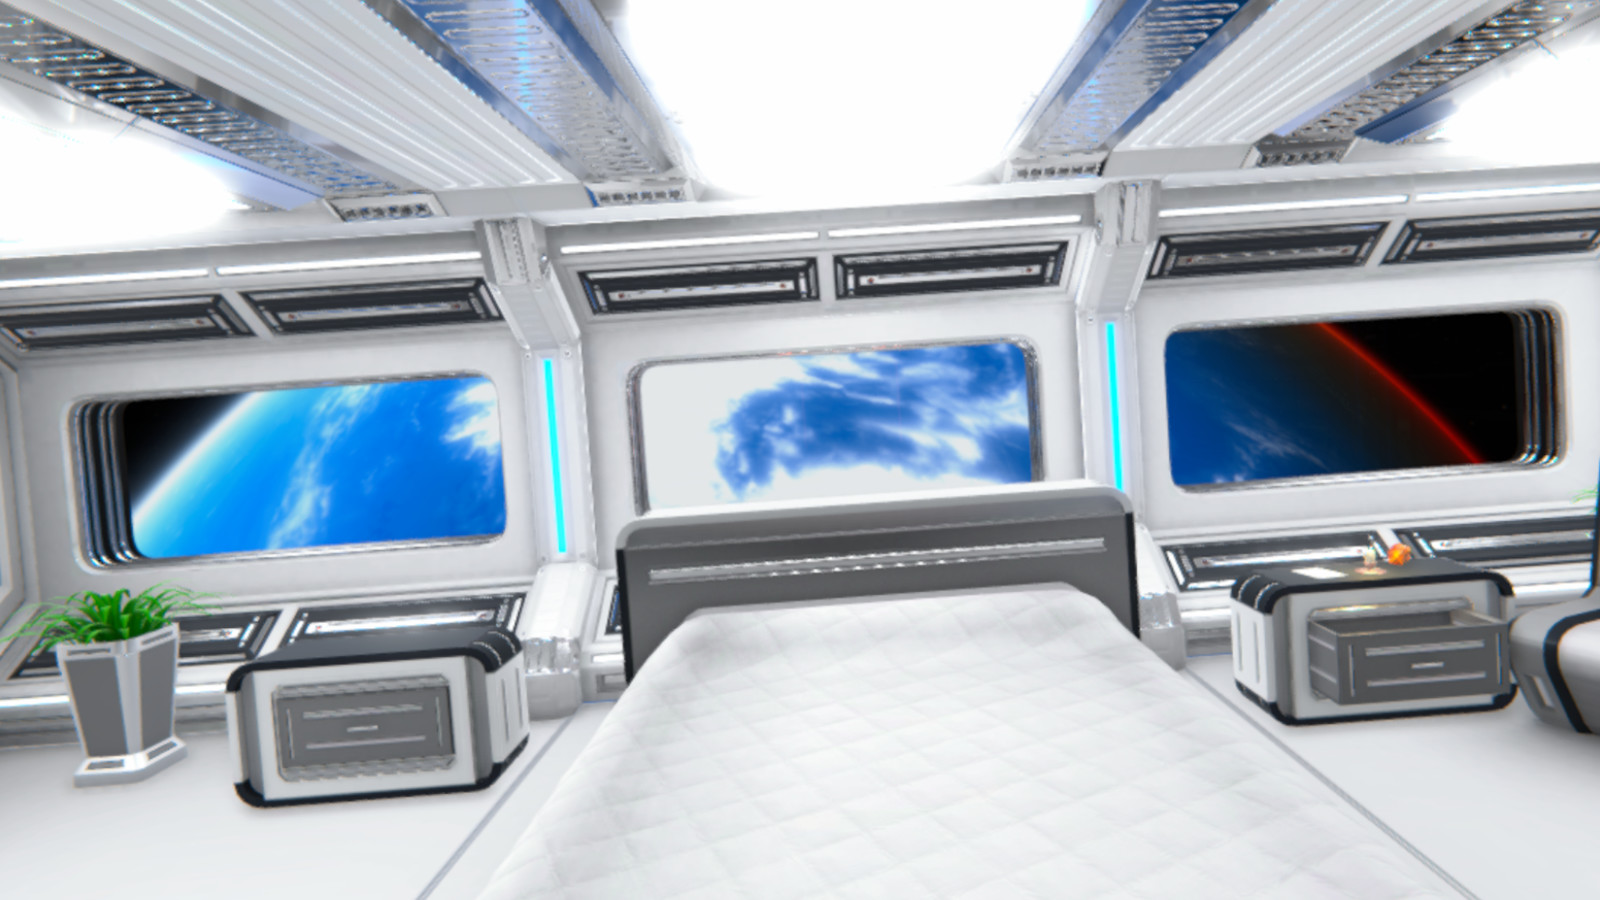 Space Panic: Room Escape (VR) screenshot